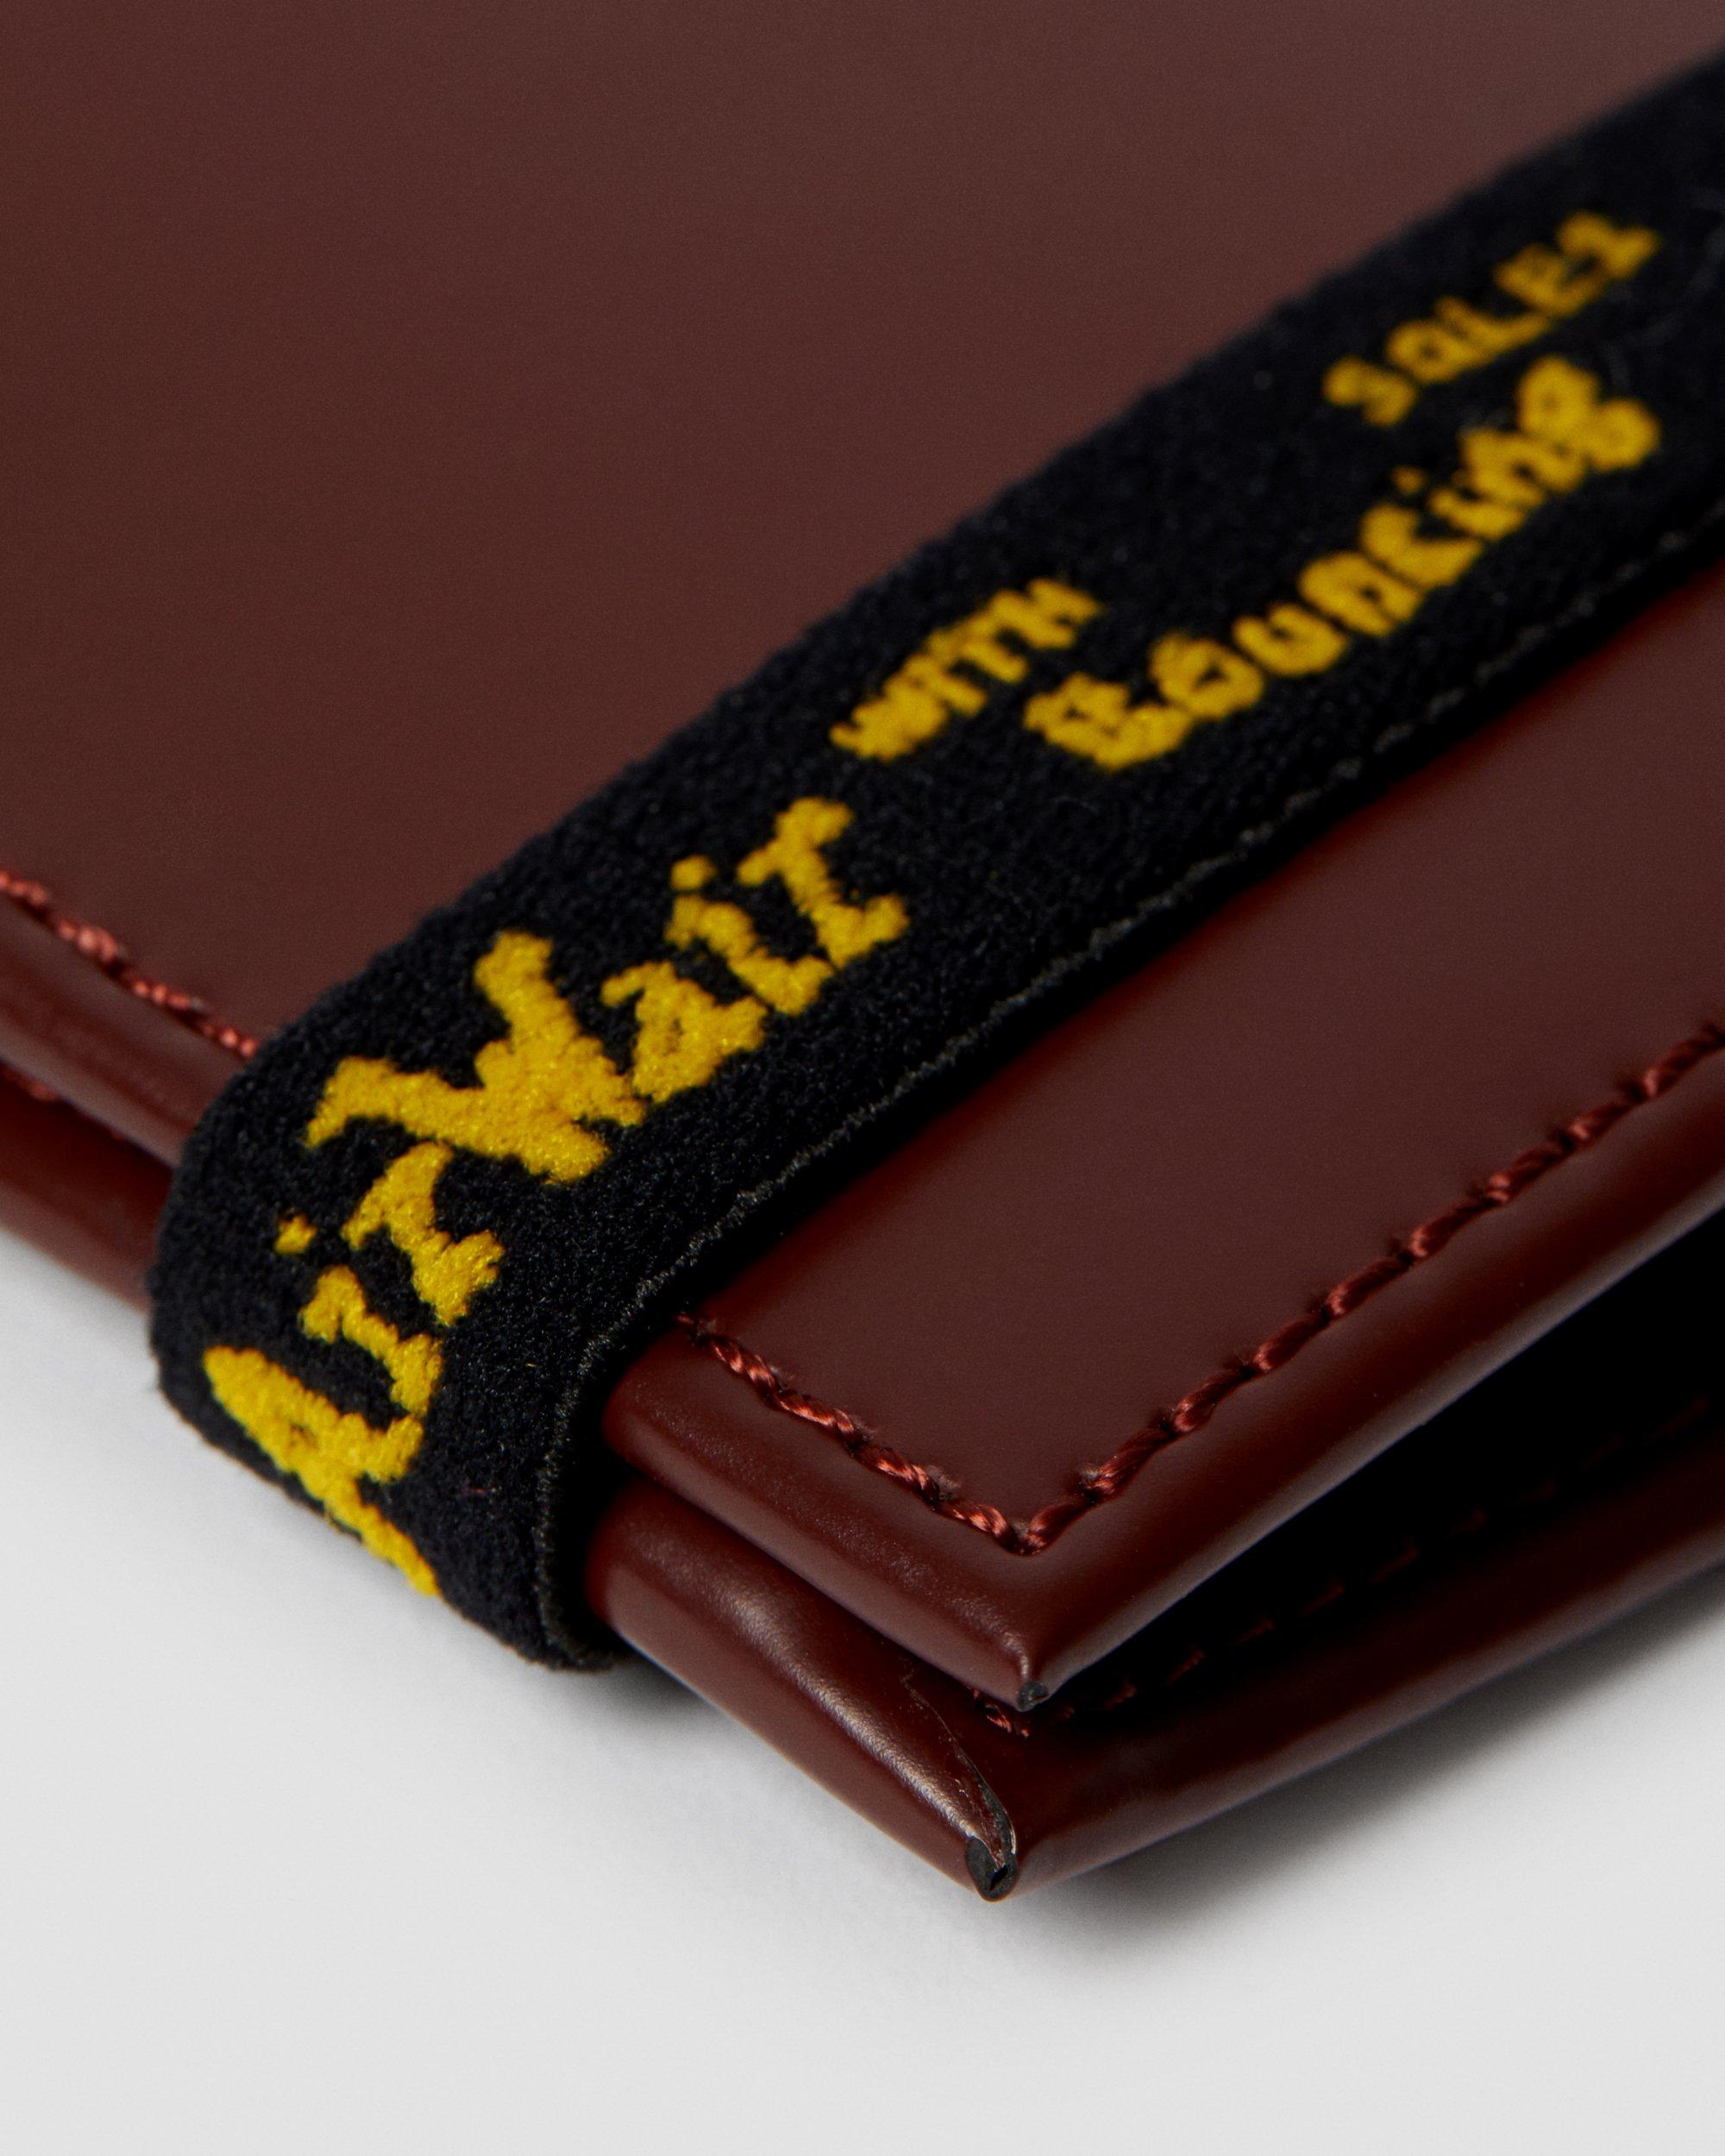 Kiev Leather Elastic Wallet in Cherry Red